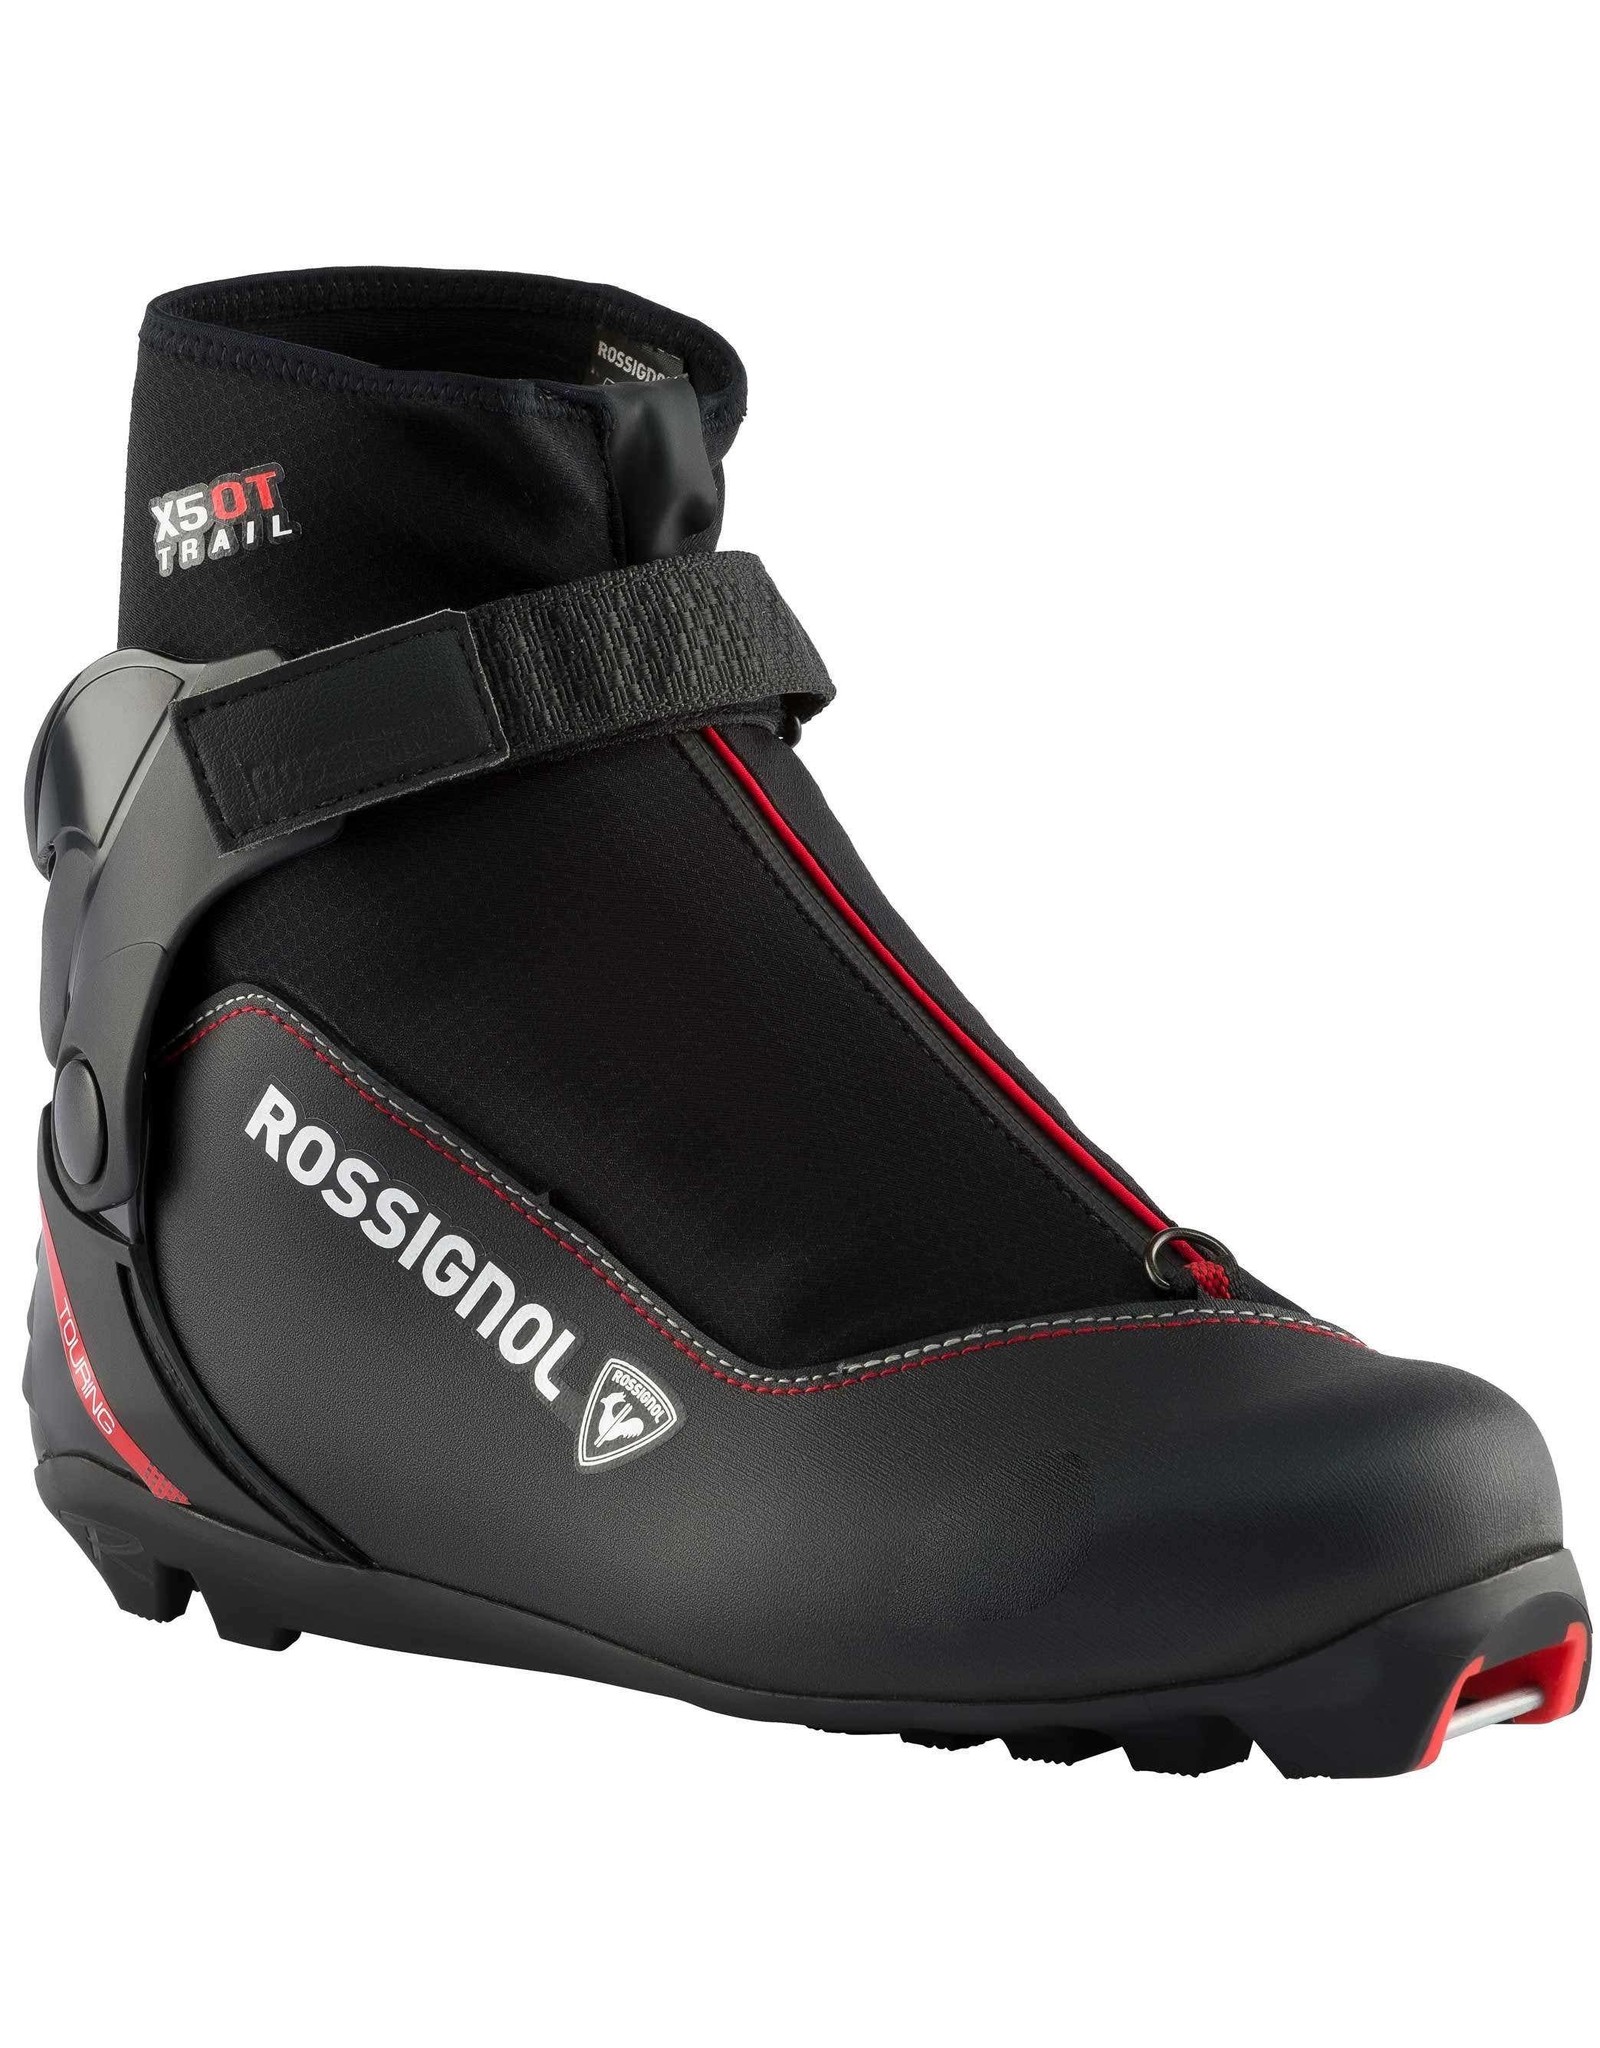 Rossignol Rossignol Men's Touring Nordic Boots X-5 0T